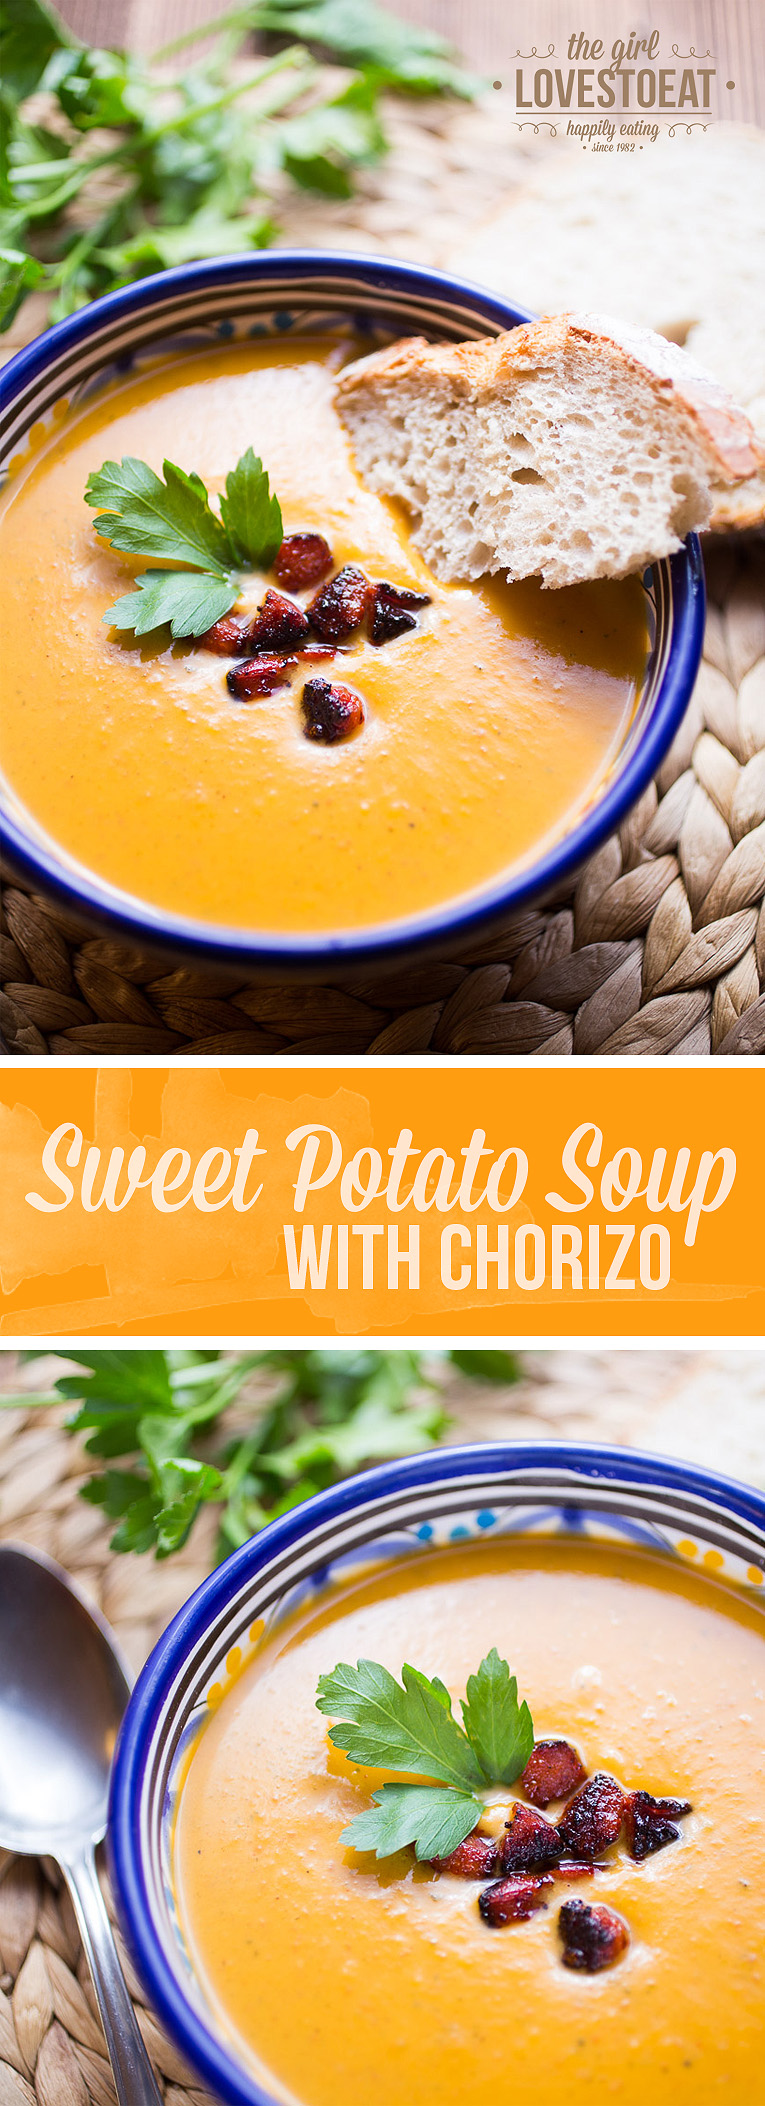 Sweet potato soup with chorizo